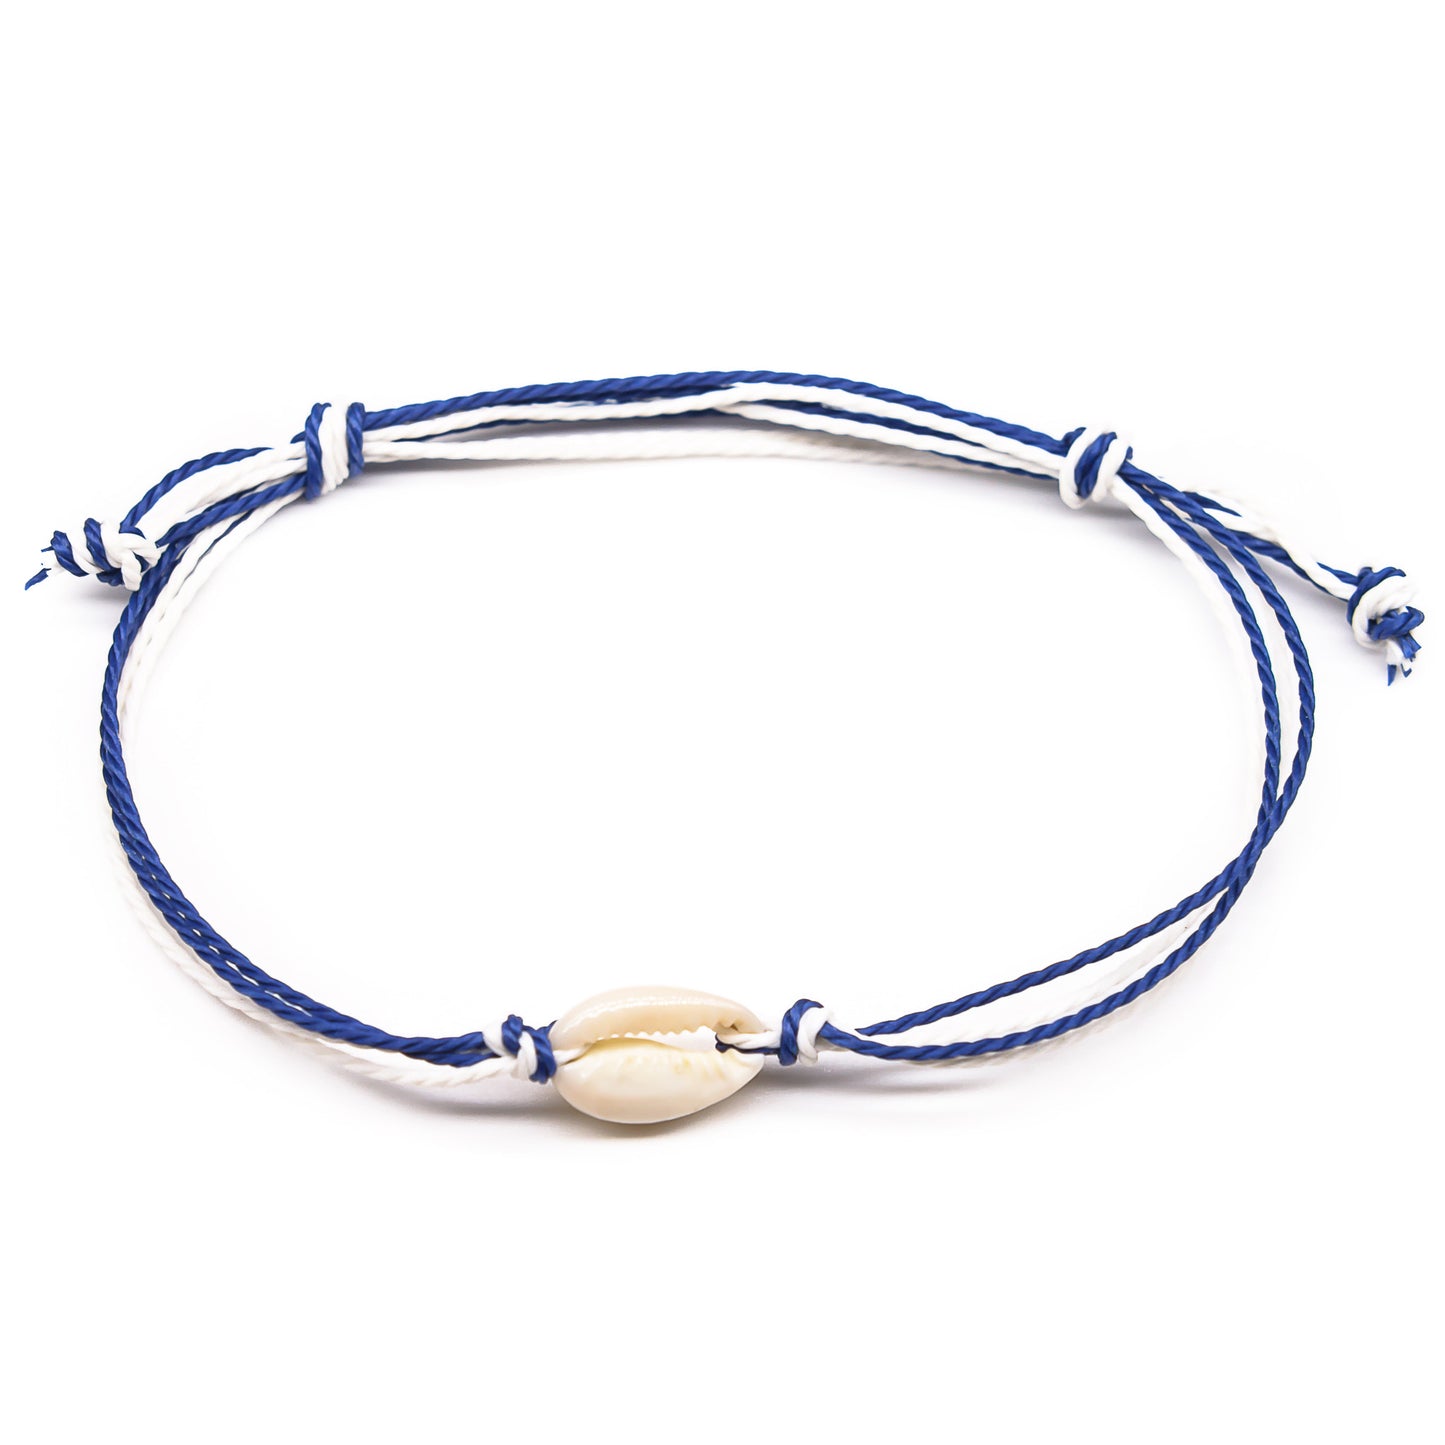 Adjustable Friendship Bracelet with Cauri Shell